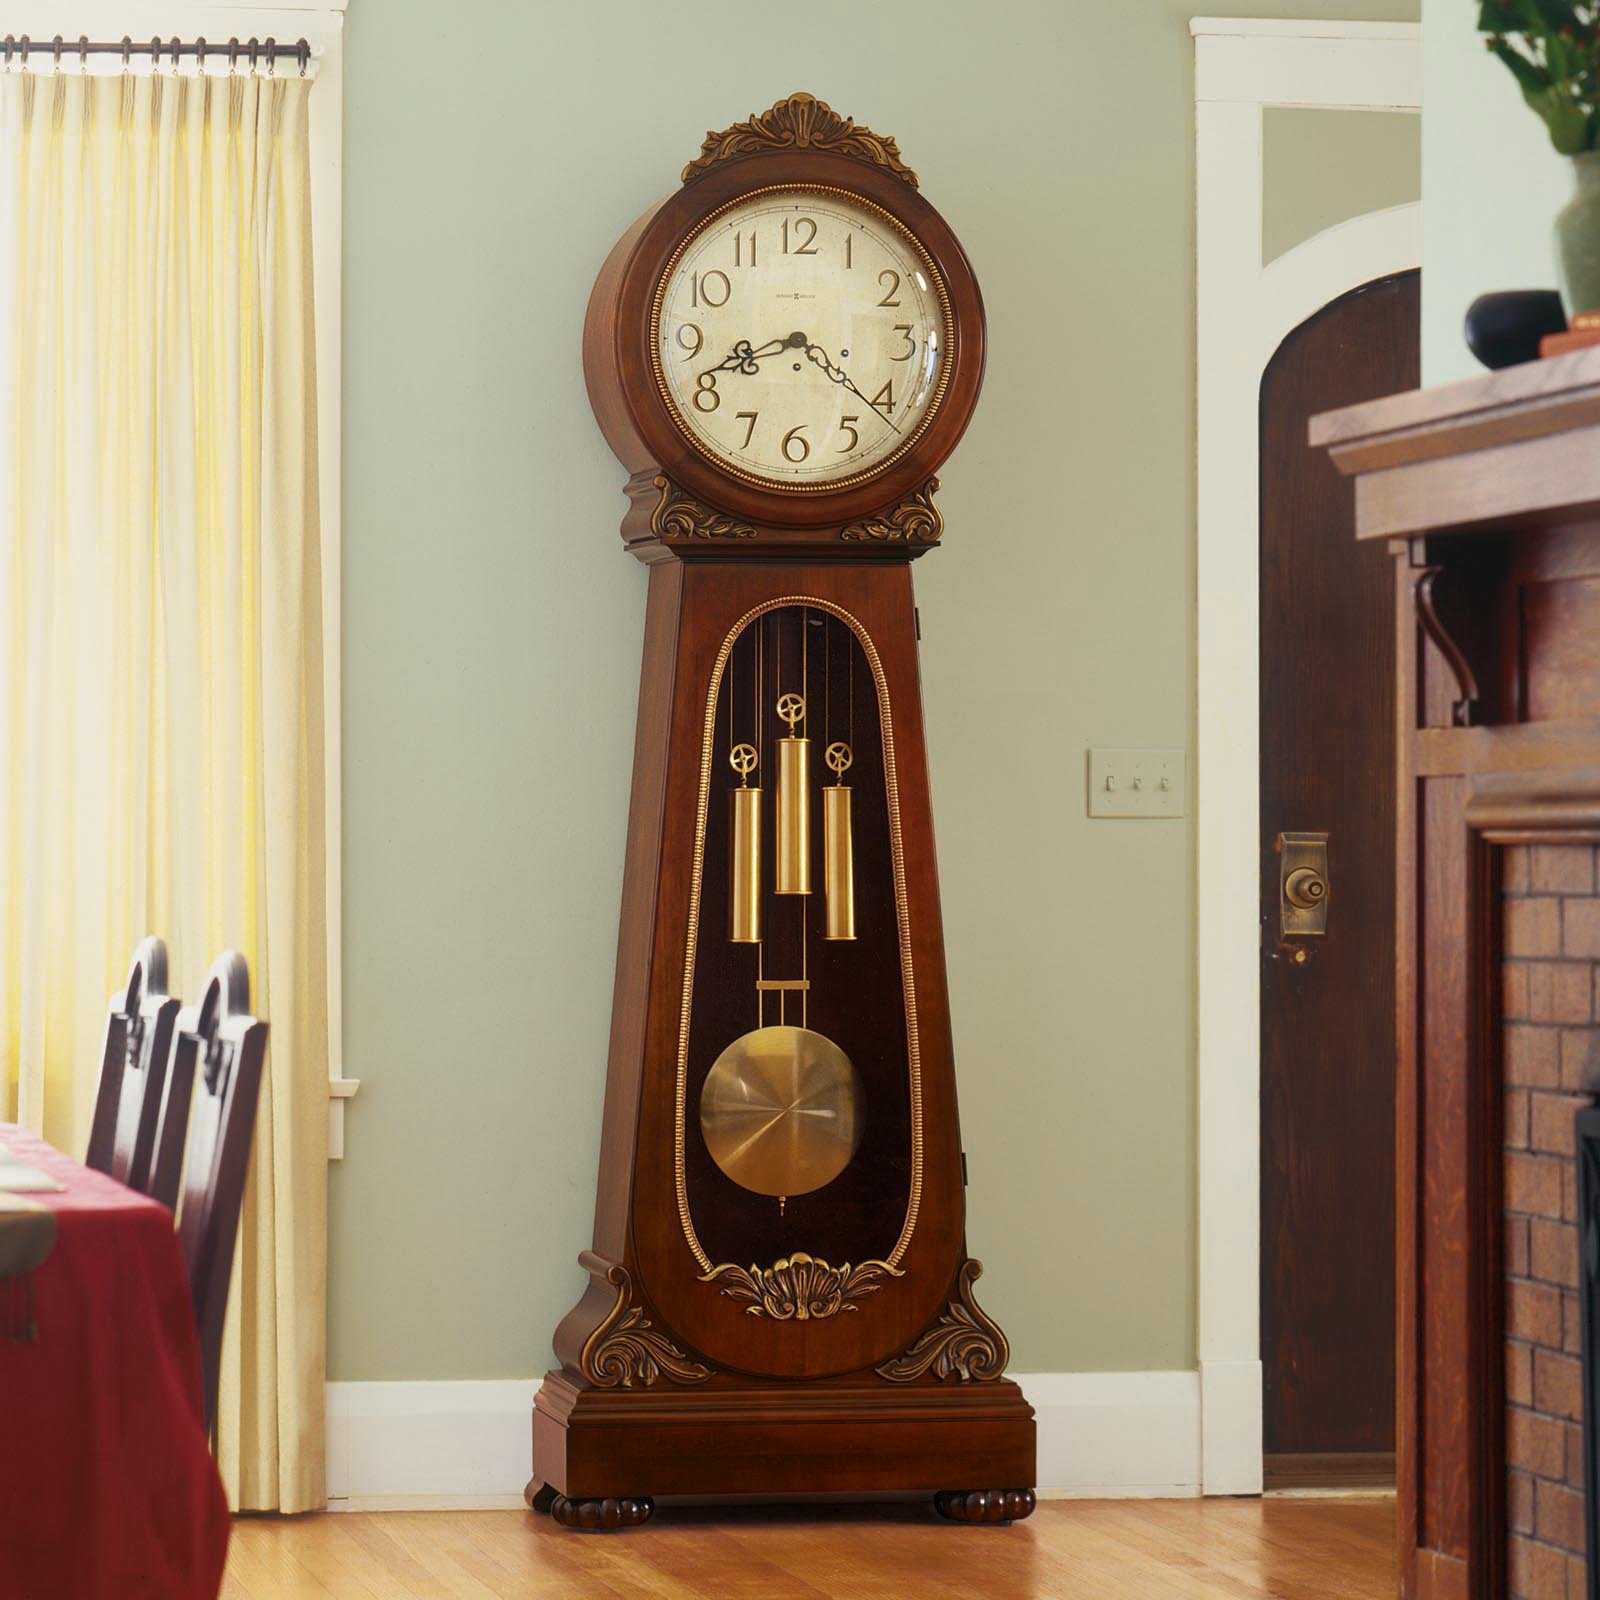 Shipping Grandfather Clocks
